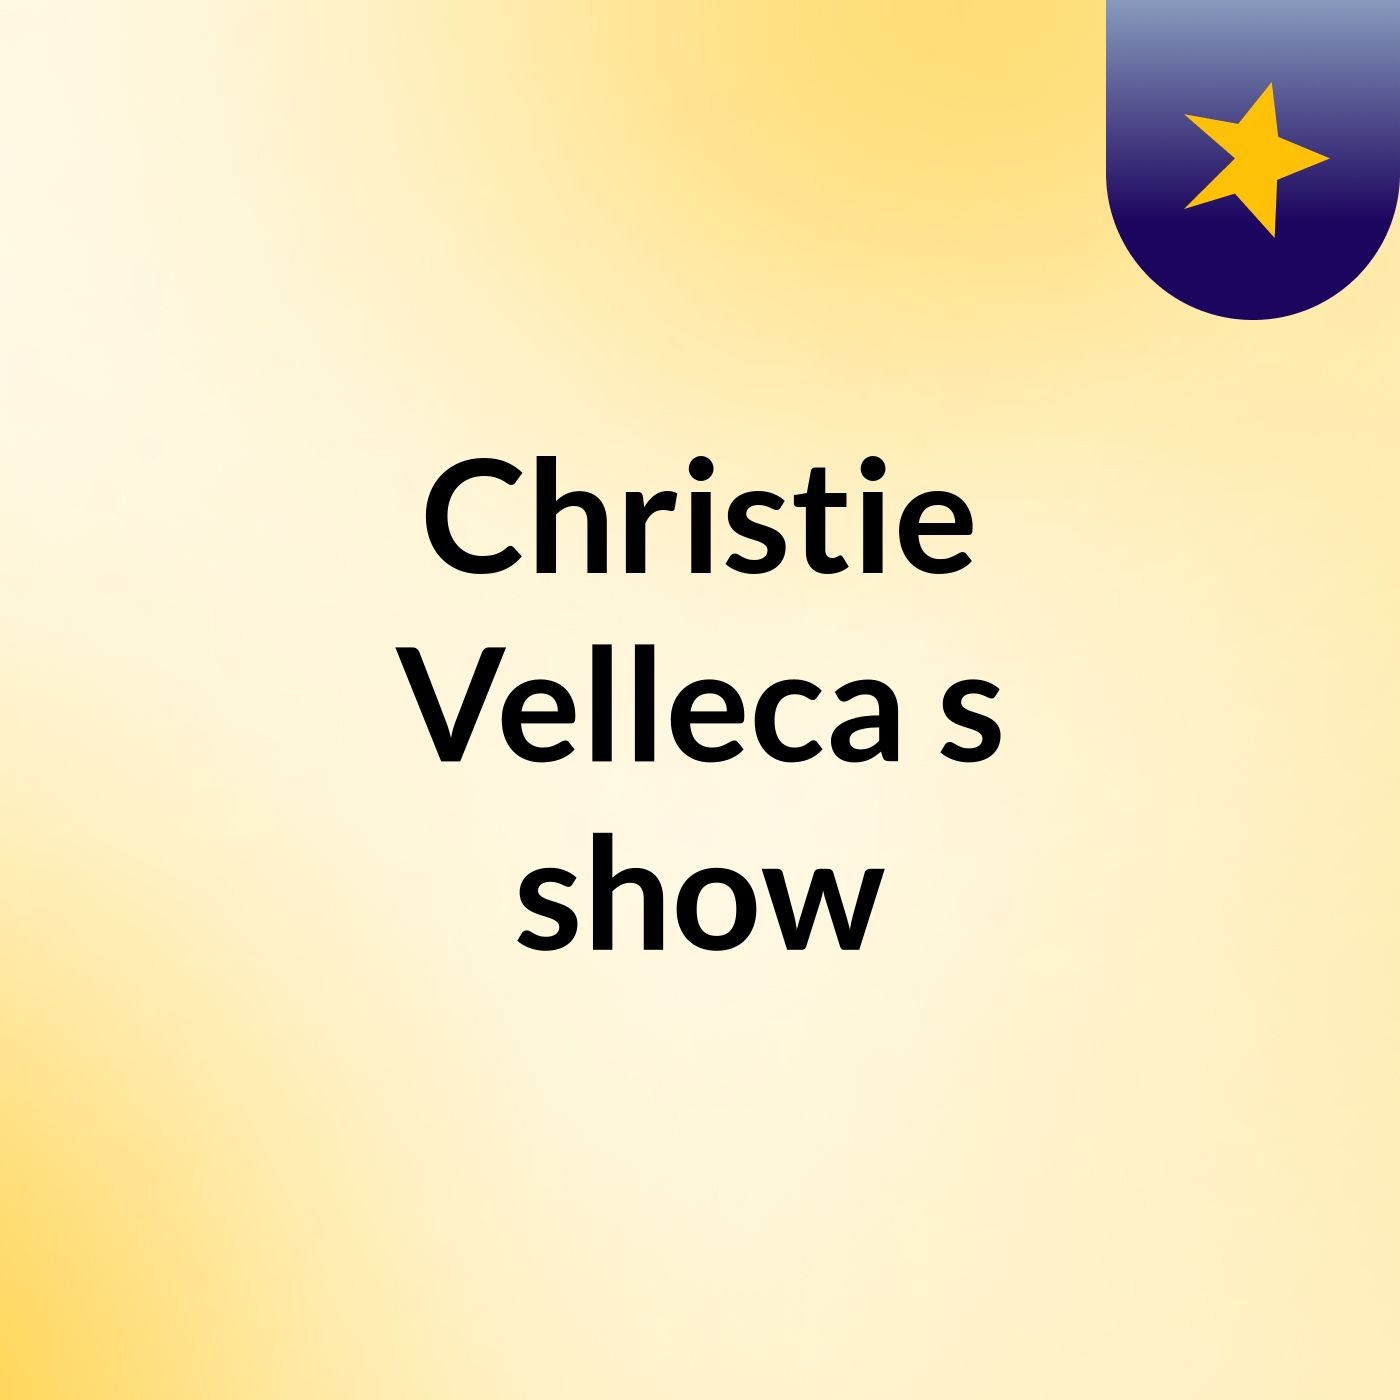 Christie Velleca's show